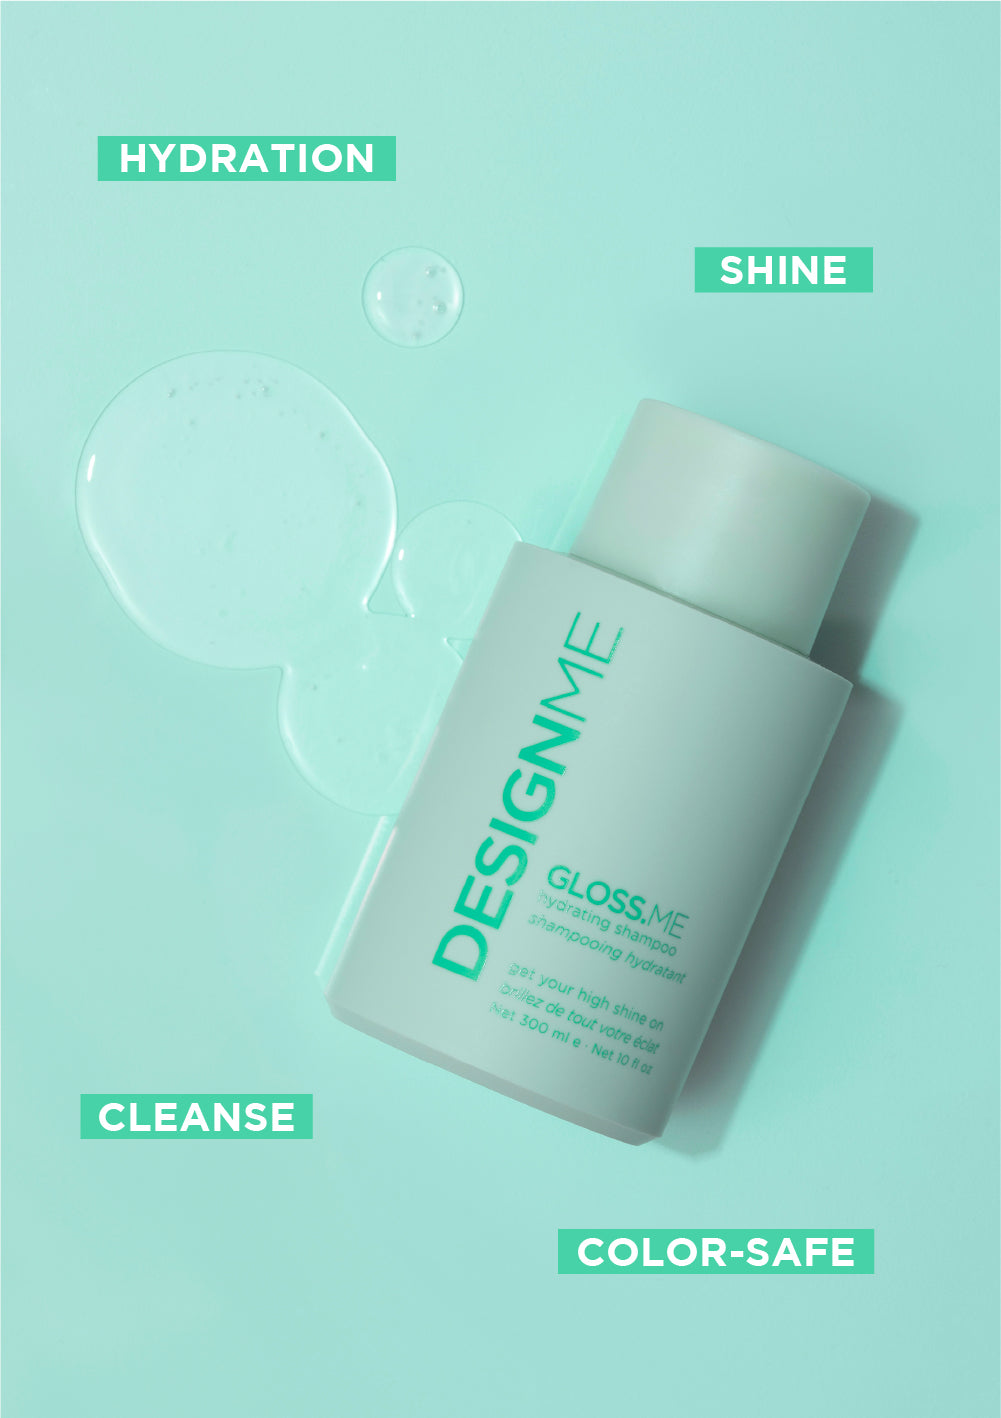 Designme - GLOSS.ME • Hydrating Shampoo